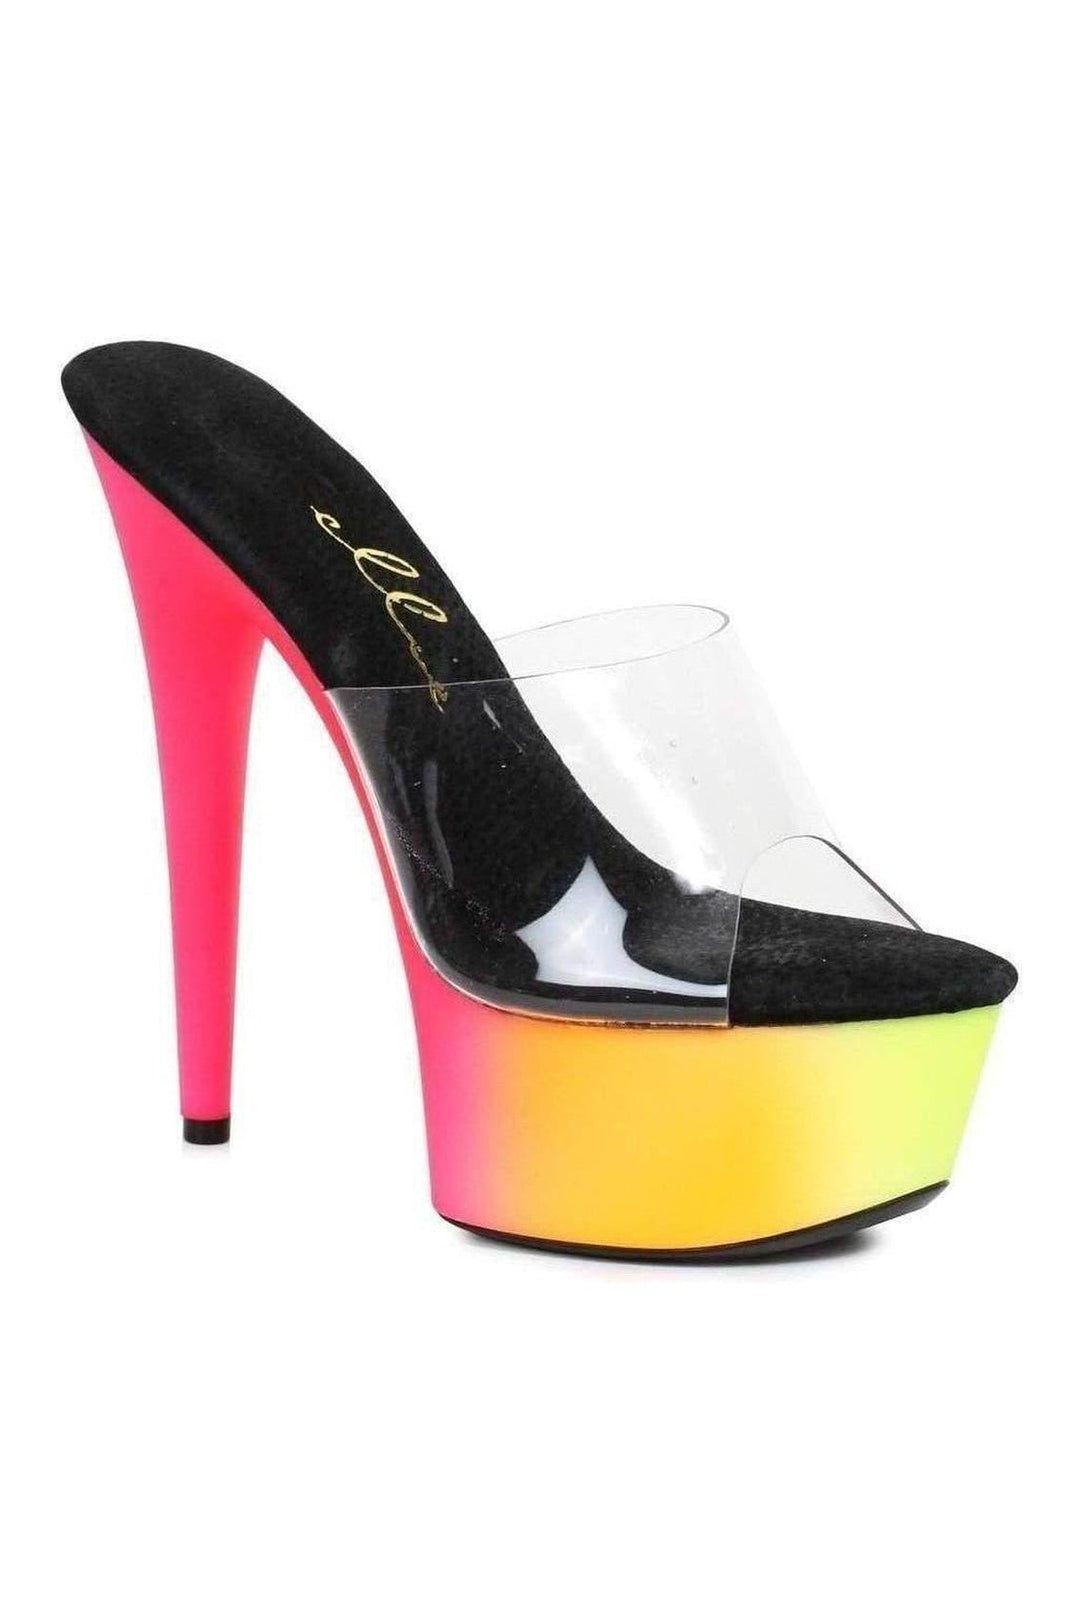 Ellie Shoes Multi Slides Platform Stripper Shoes | Buy at Sexyshoes.com